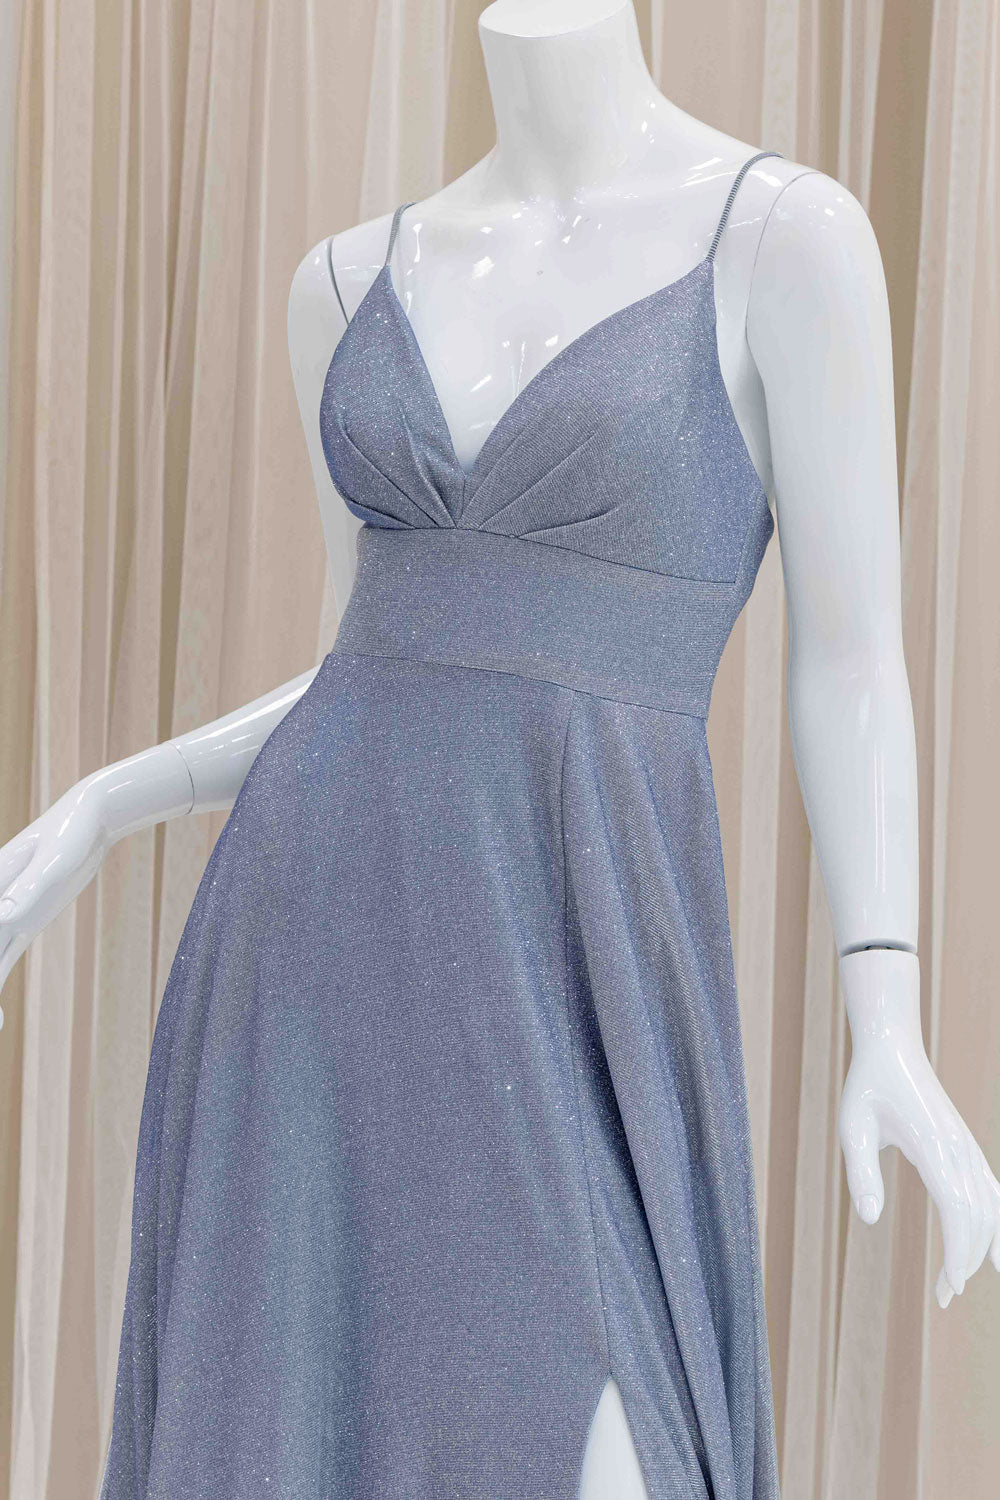 Simple Glitter Prom Dress in Light Blue